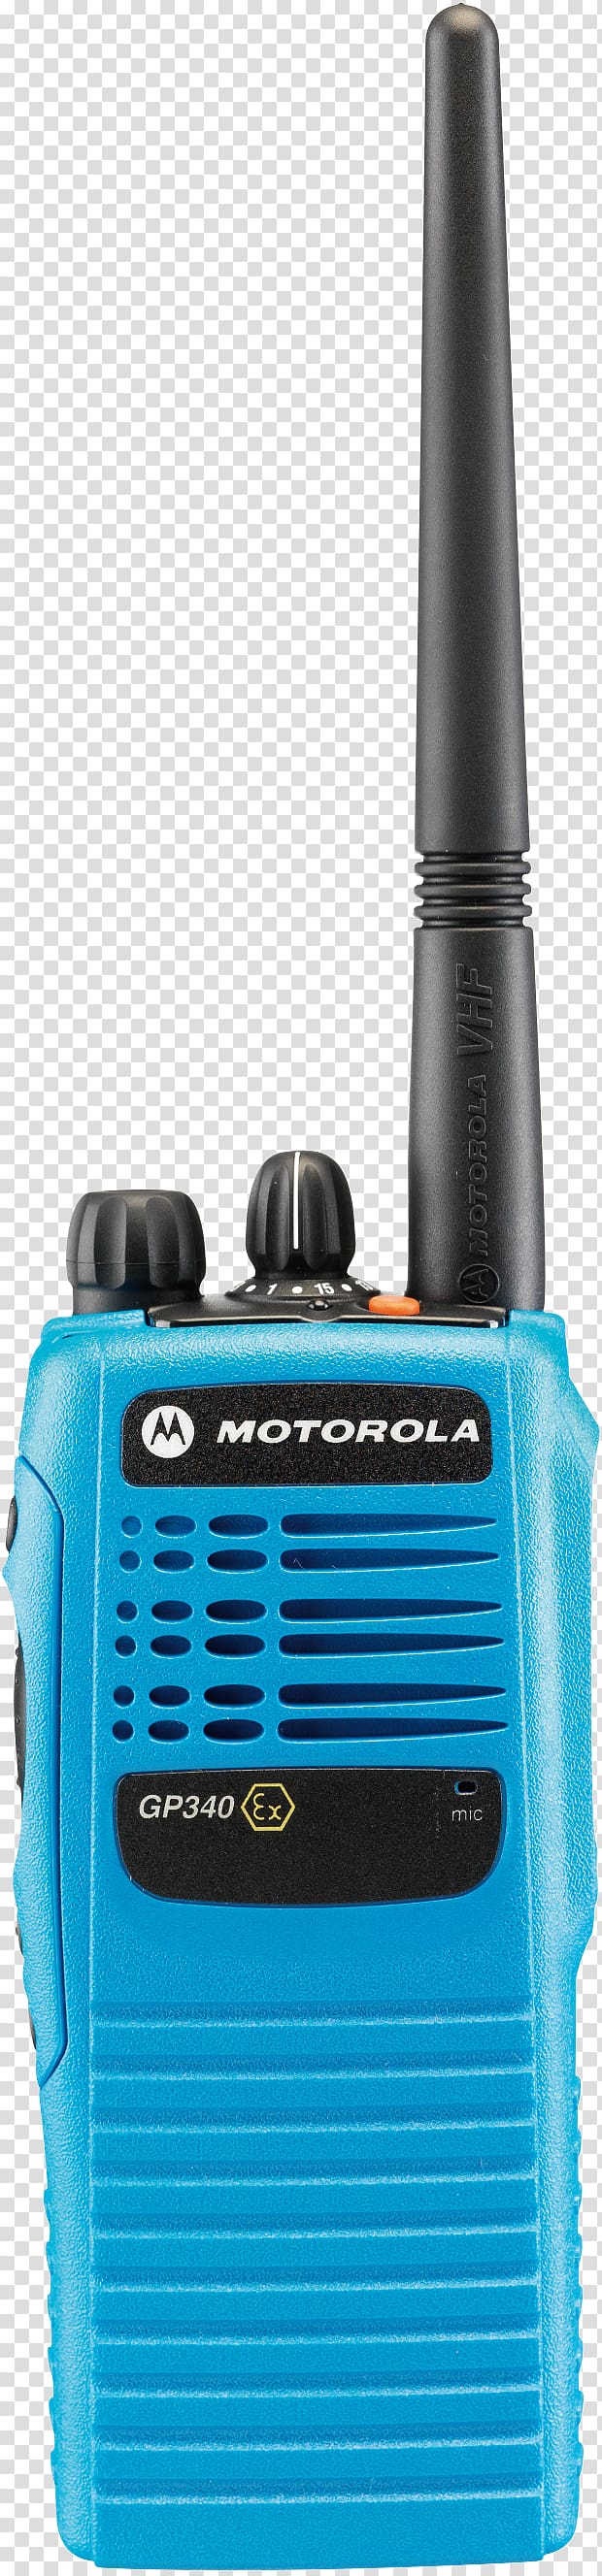 Two-way radio Walkie-talkie Motorola ATEX directive, radio transparent background PNG clipart